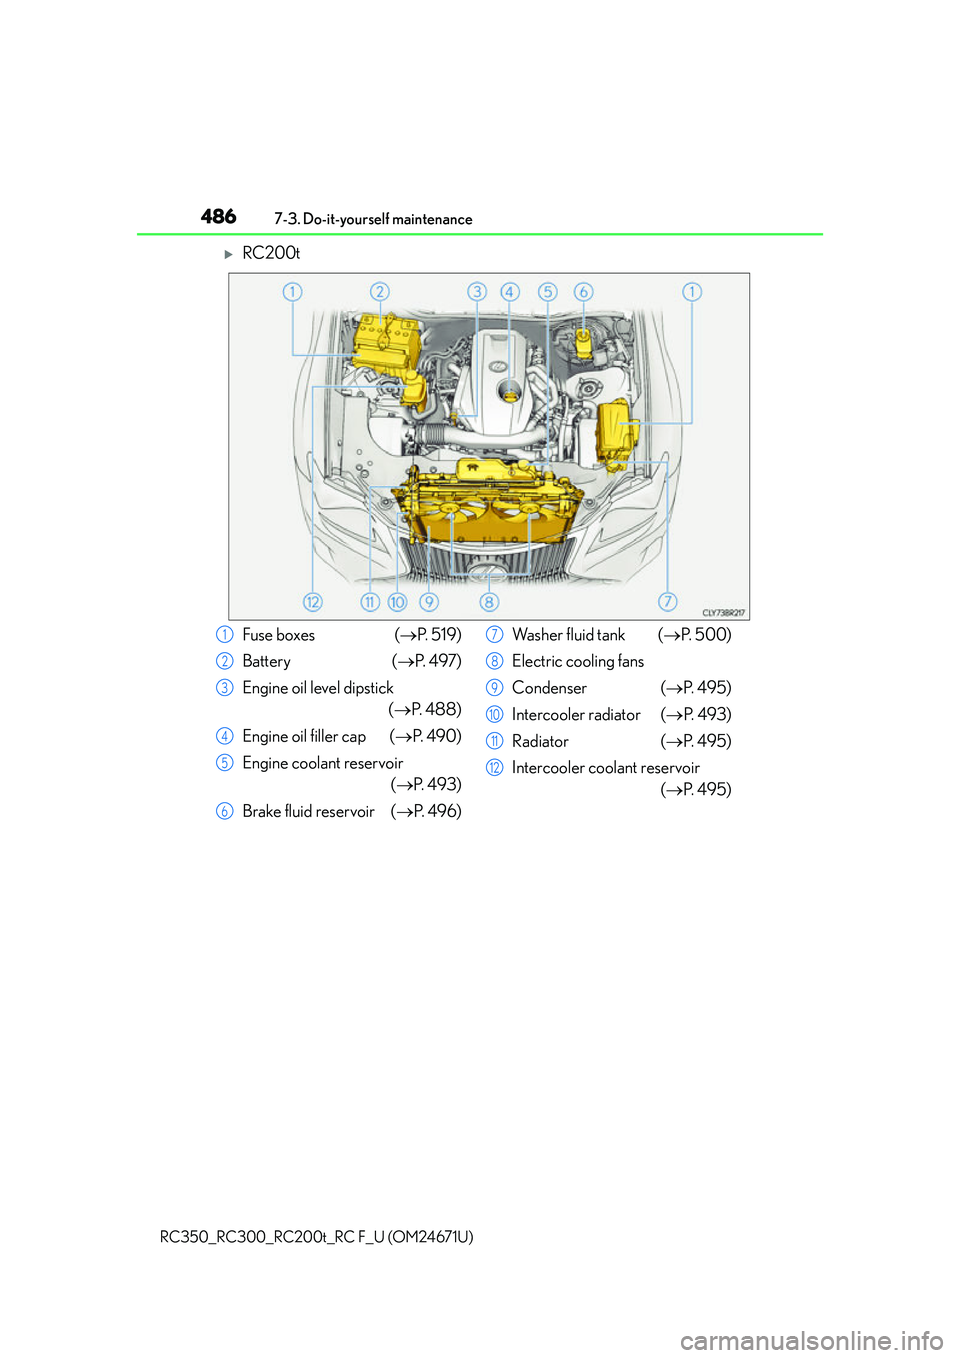 LEXUS RC300 2016  Owners Manual 4867-3. Do-it-yourself maintenance
RC350_RC300_RC200t_RC F_U (OM24671U)
RC200t
Fuse boxes  ( P.  5 1 9 )
Battery ( P.  4 9 7 )
Engine oil level dipstick (P.  4 8 8 )
Engine oil filler cap 